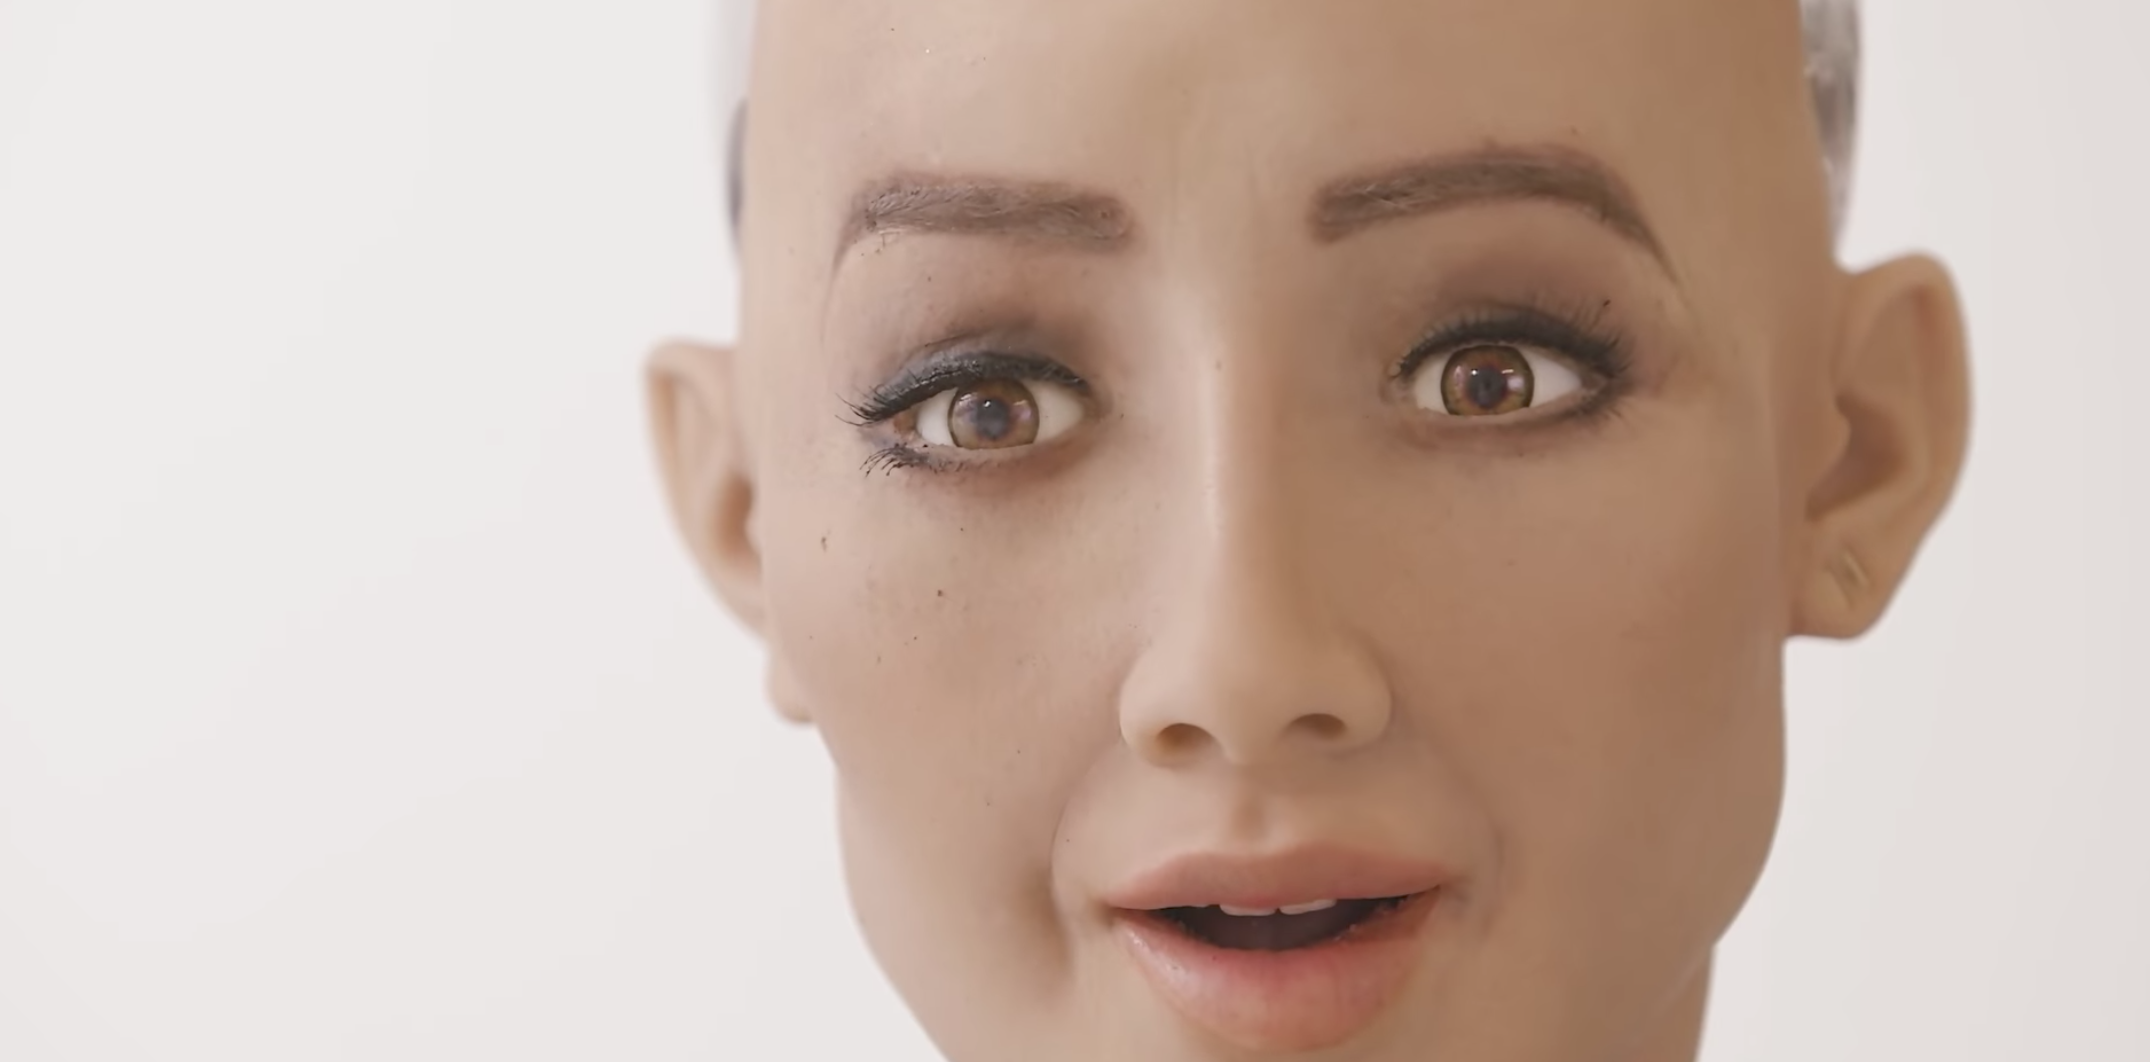 Saudi Arabia bestows citizenship on a robot named Sophia